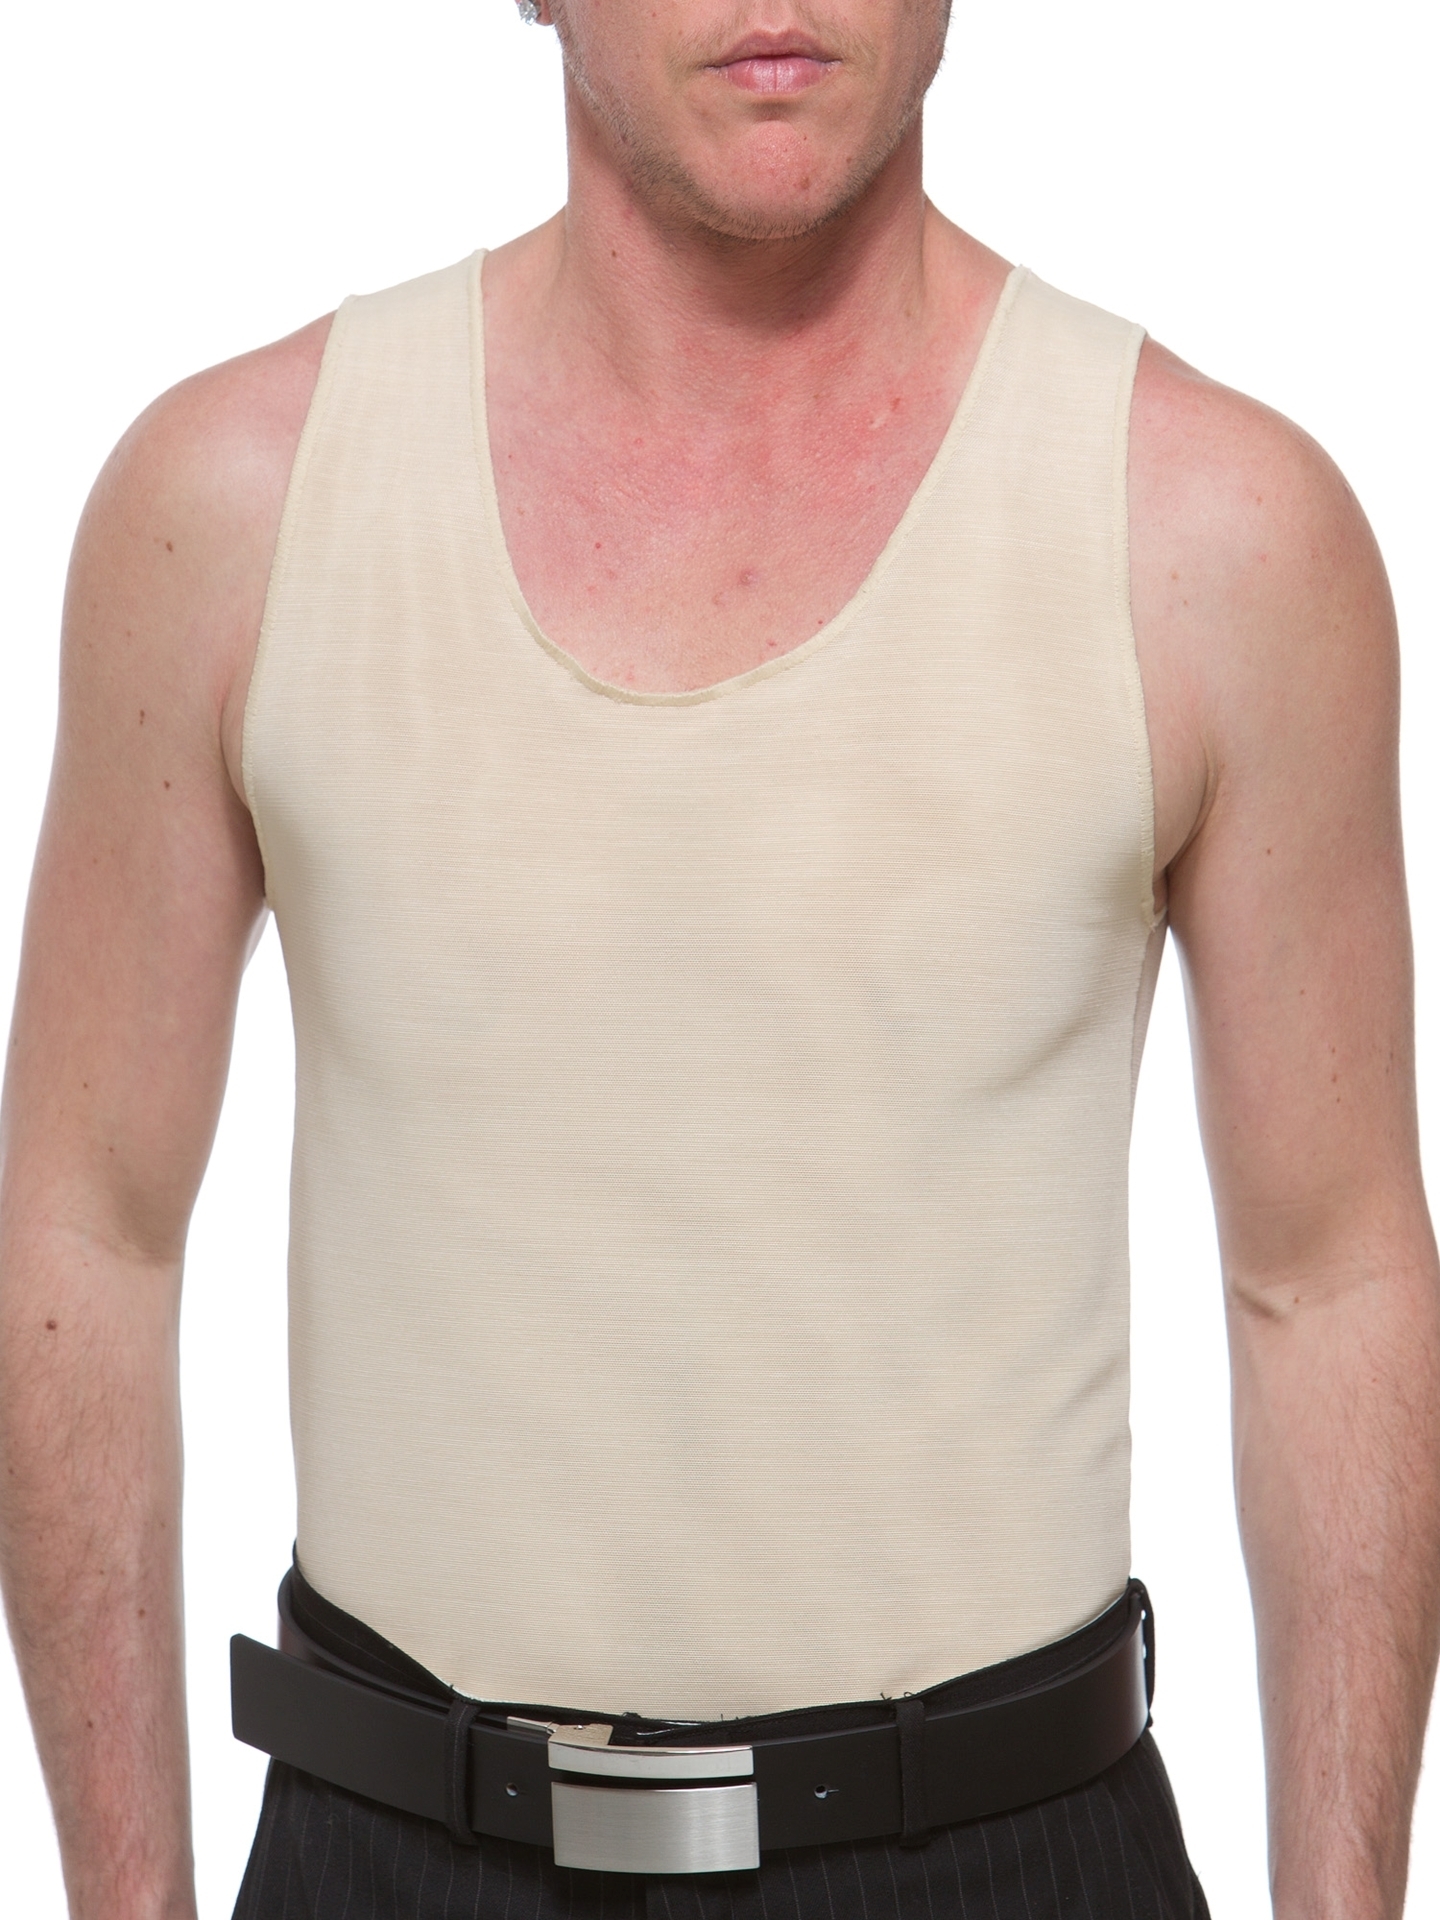 Premium men's chest binder top for a flatter chest